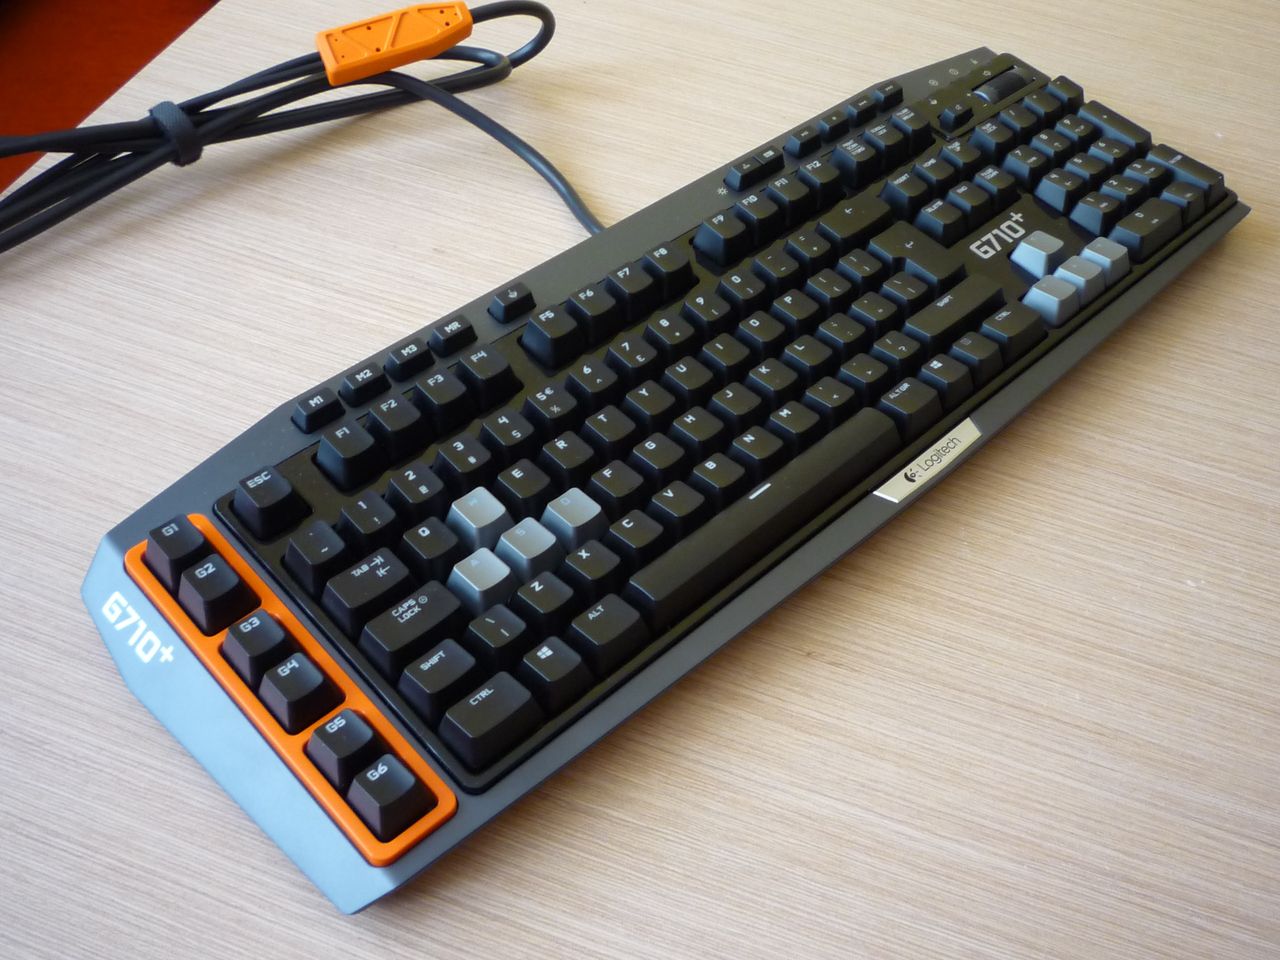 Logitech G710+ Mechanical Keyboard without detachable palmrest